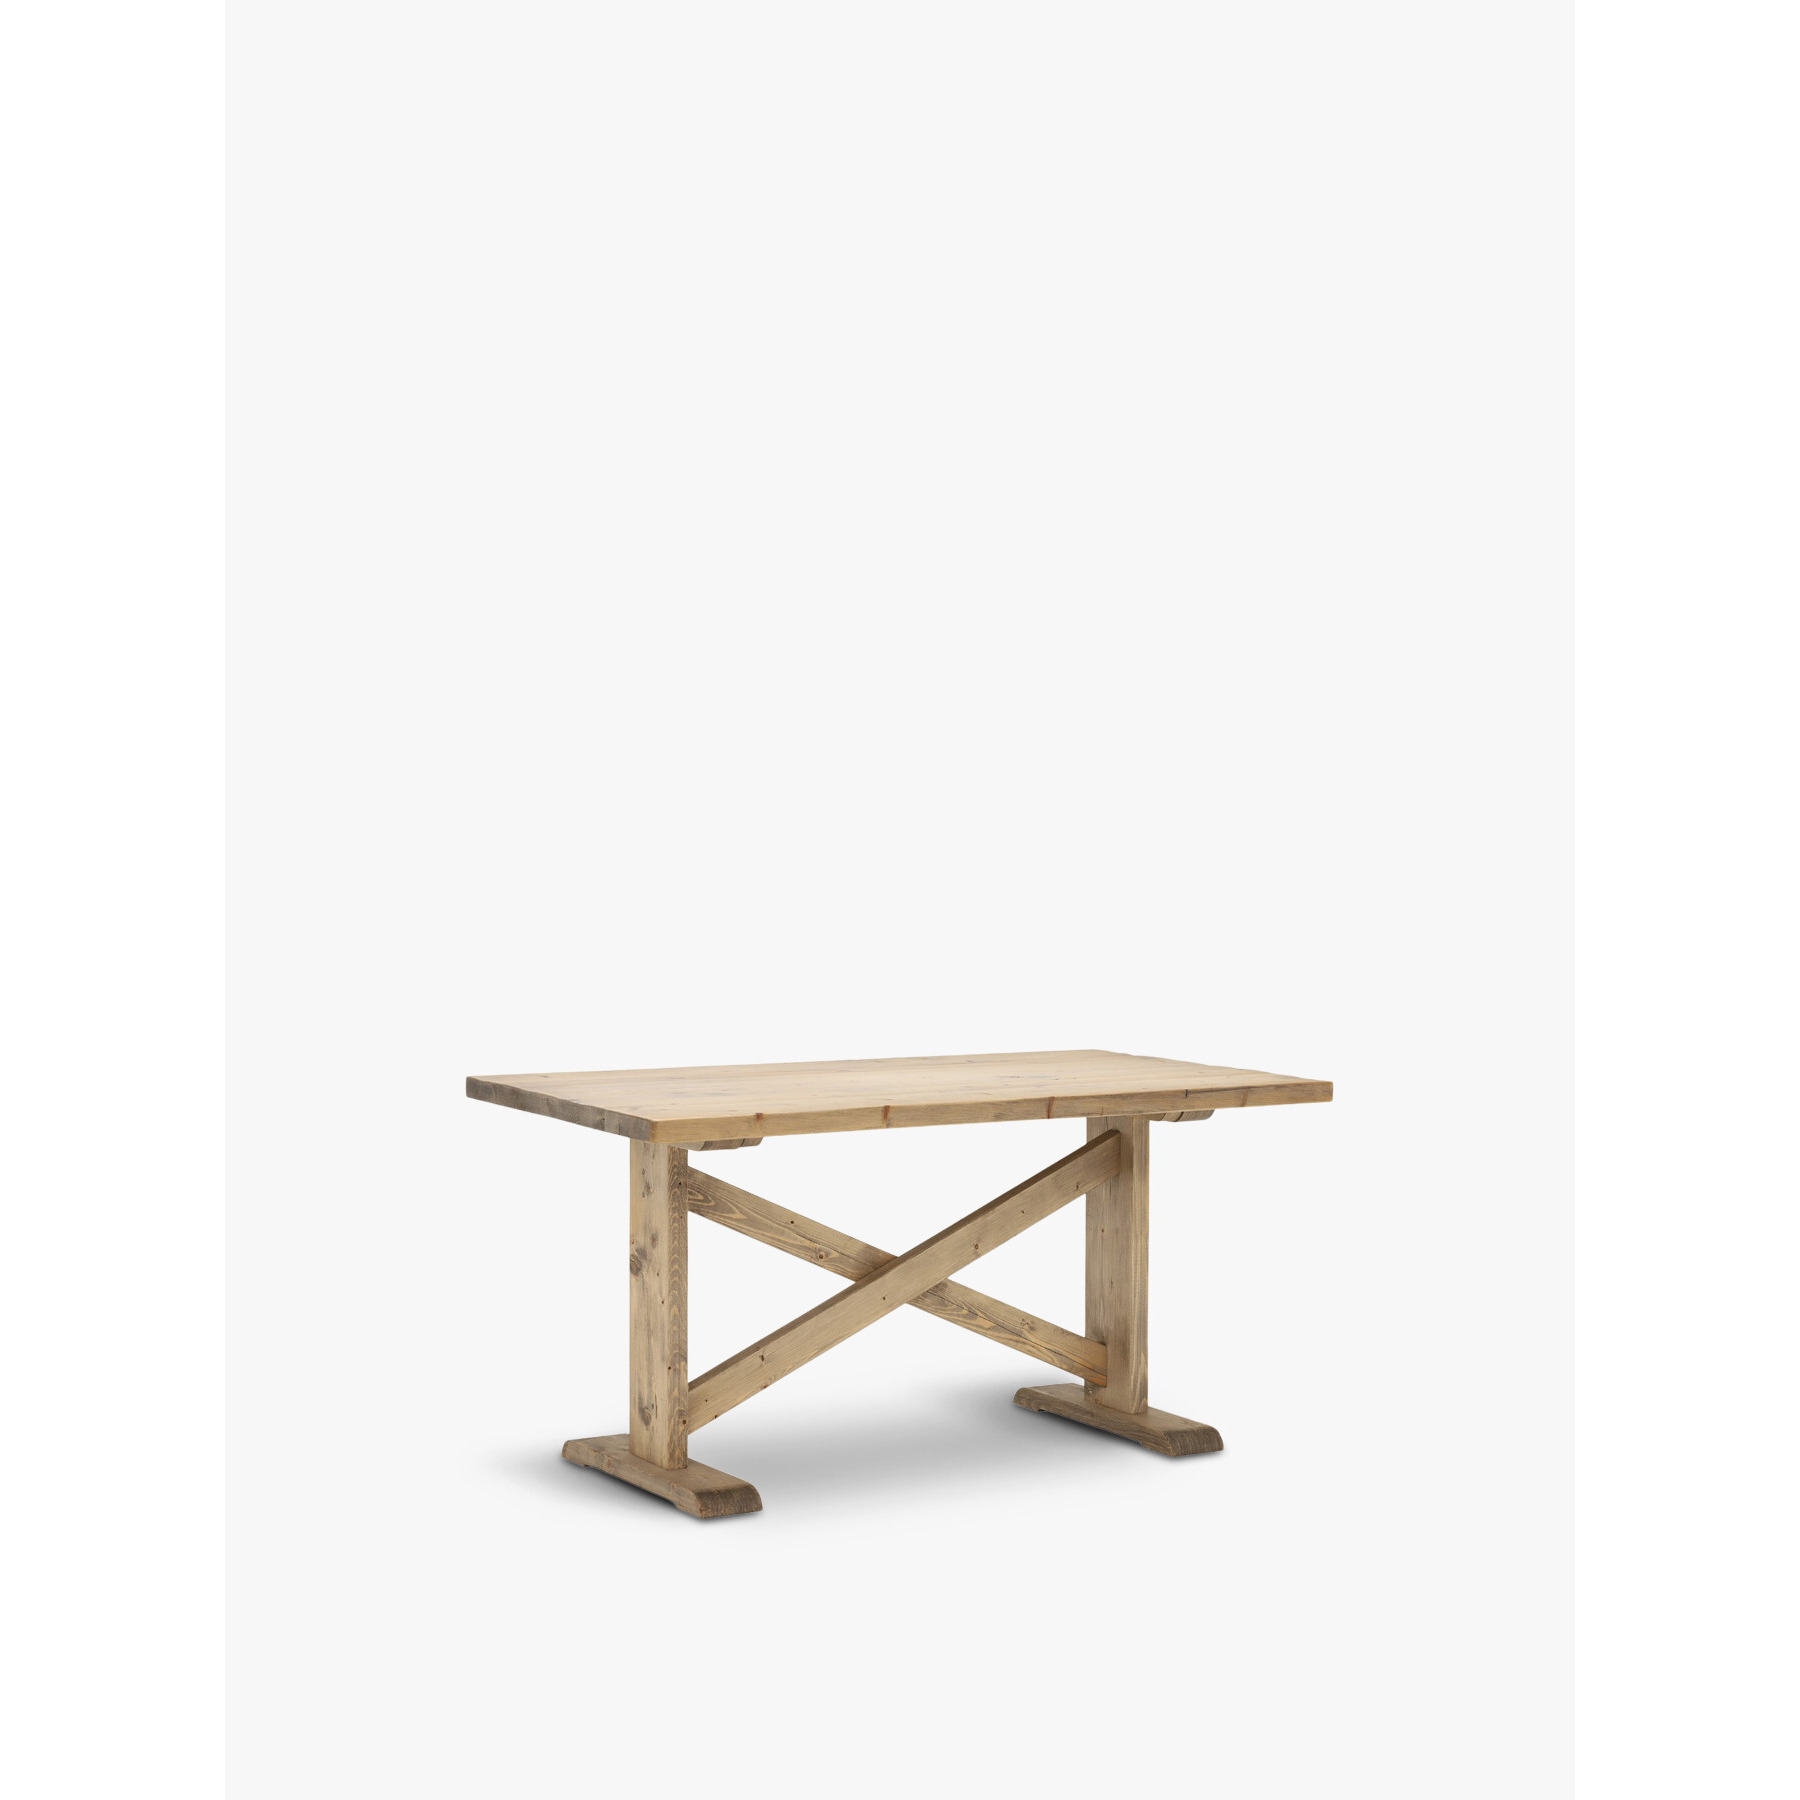 Barker and Stonehouse Newsham Reclaimed Wood Dining Table, Grey Waxed Finish - image 1